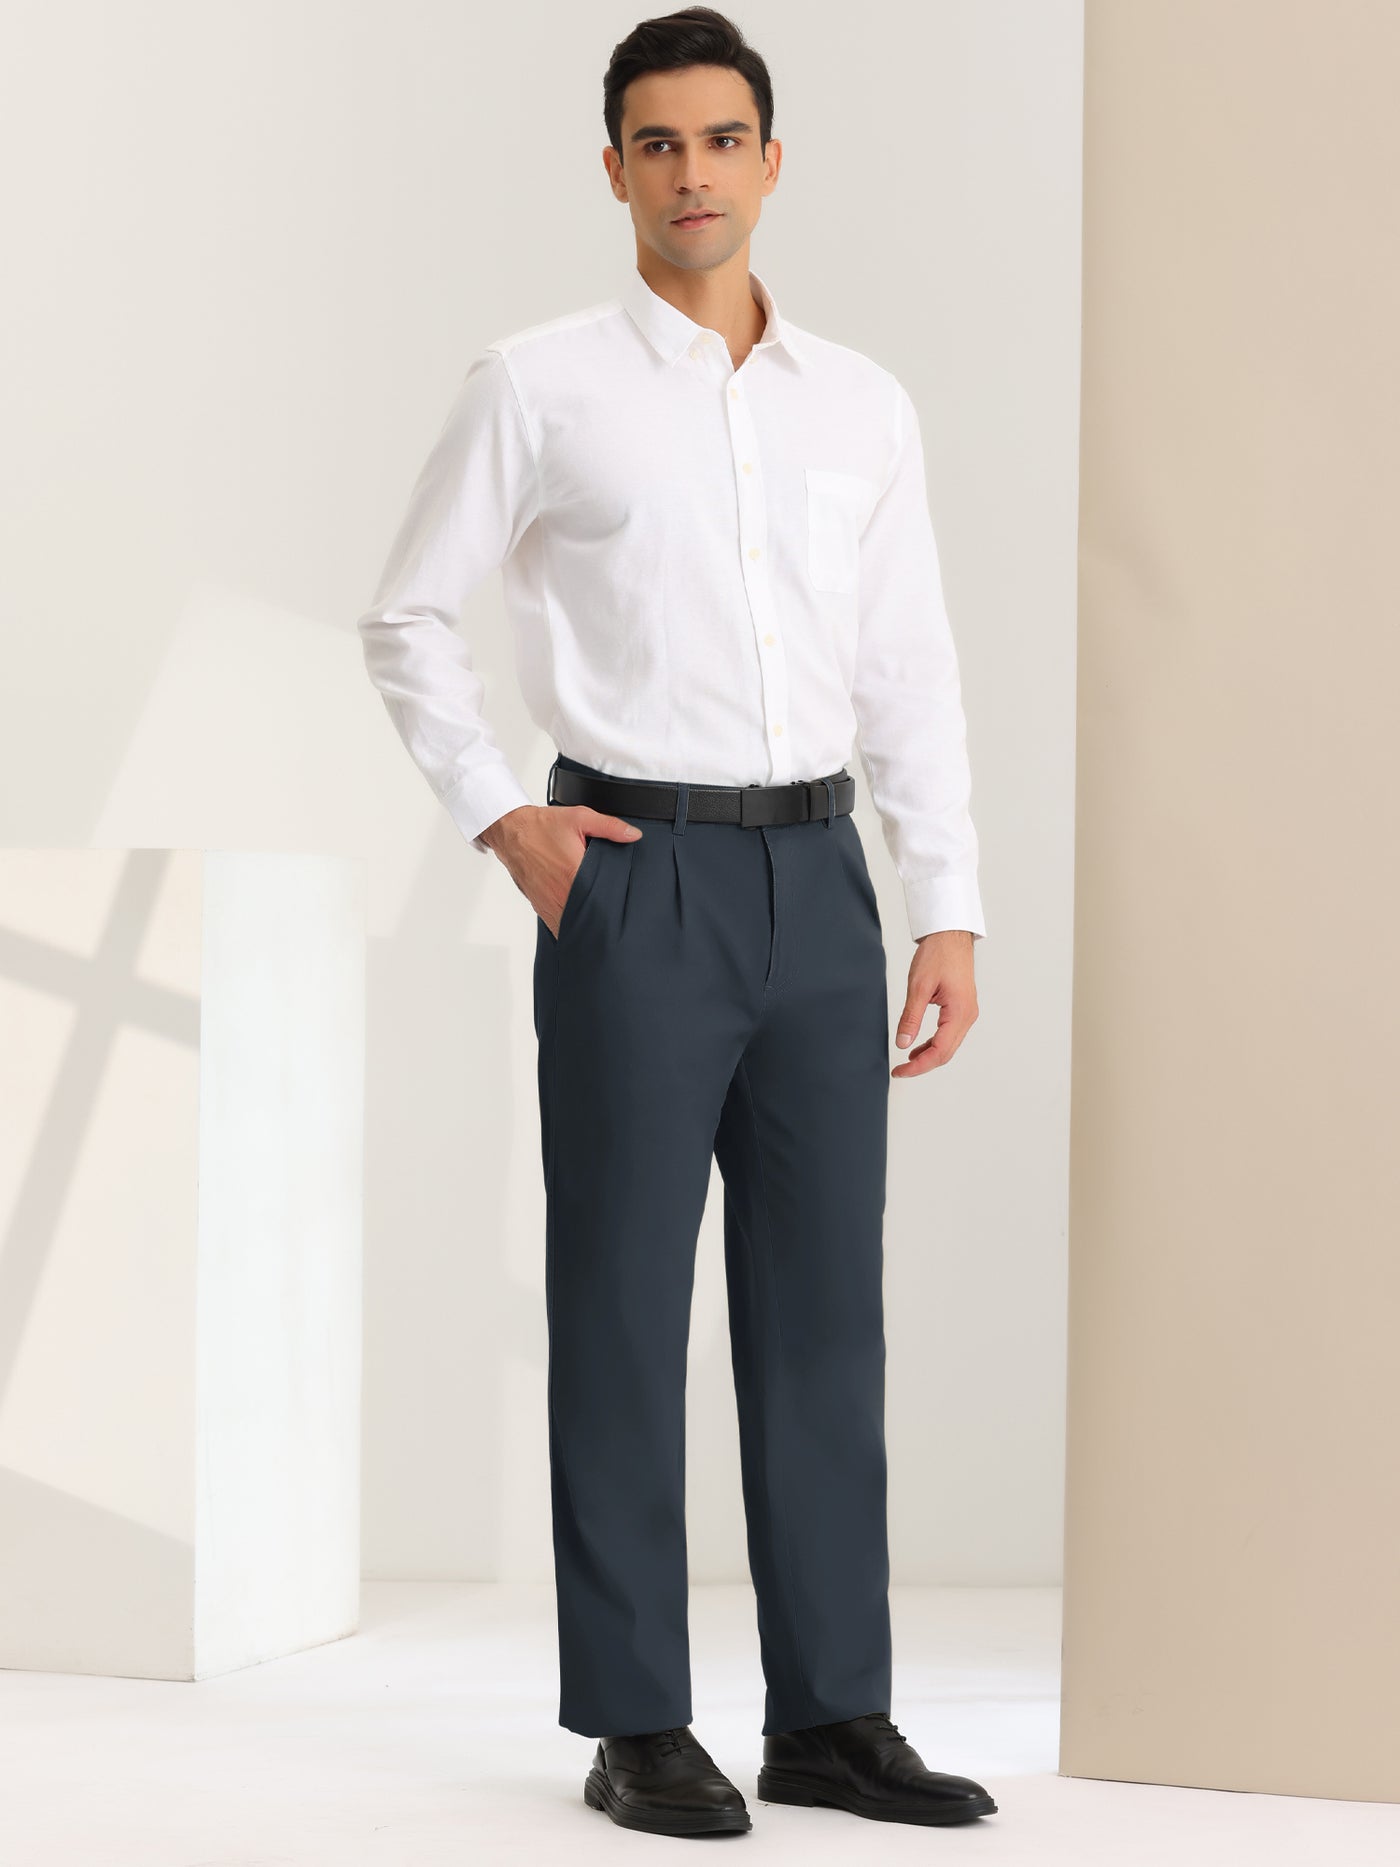 Bublédon Men's Business Classic Fit Dress Pants Pleated Front Workwear Trousers